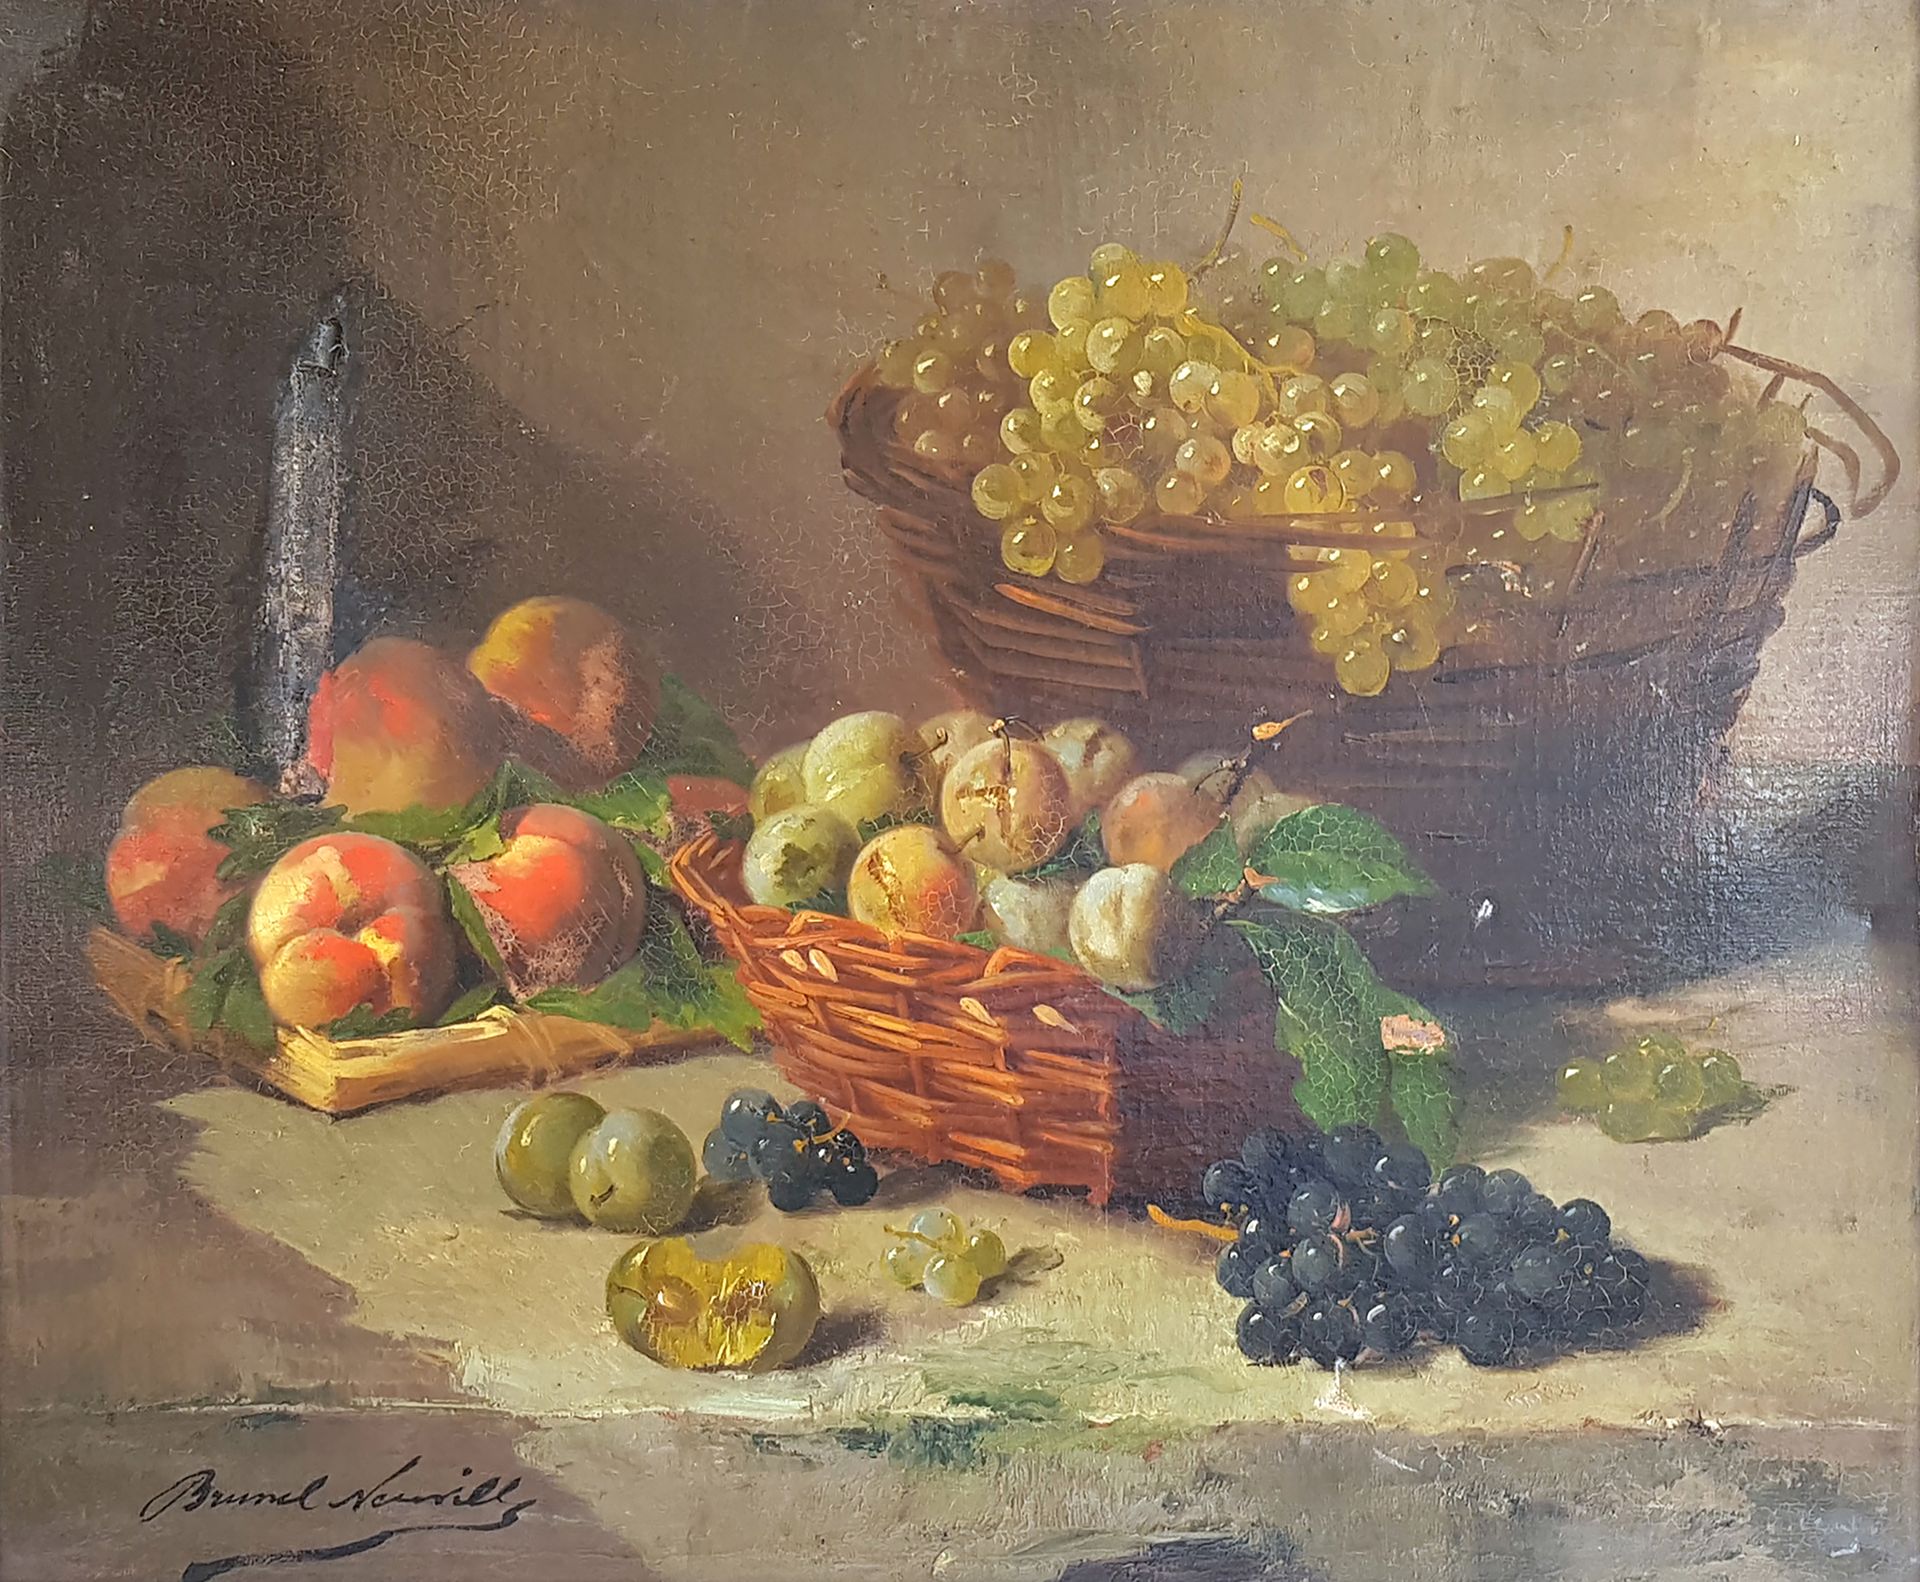 Null Alfred BRUNEL de NEUVILLE (1852-1941)

Bodegón con frutas

Óleo sobre lienz&hellip;